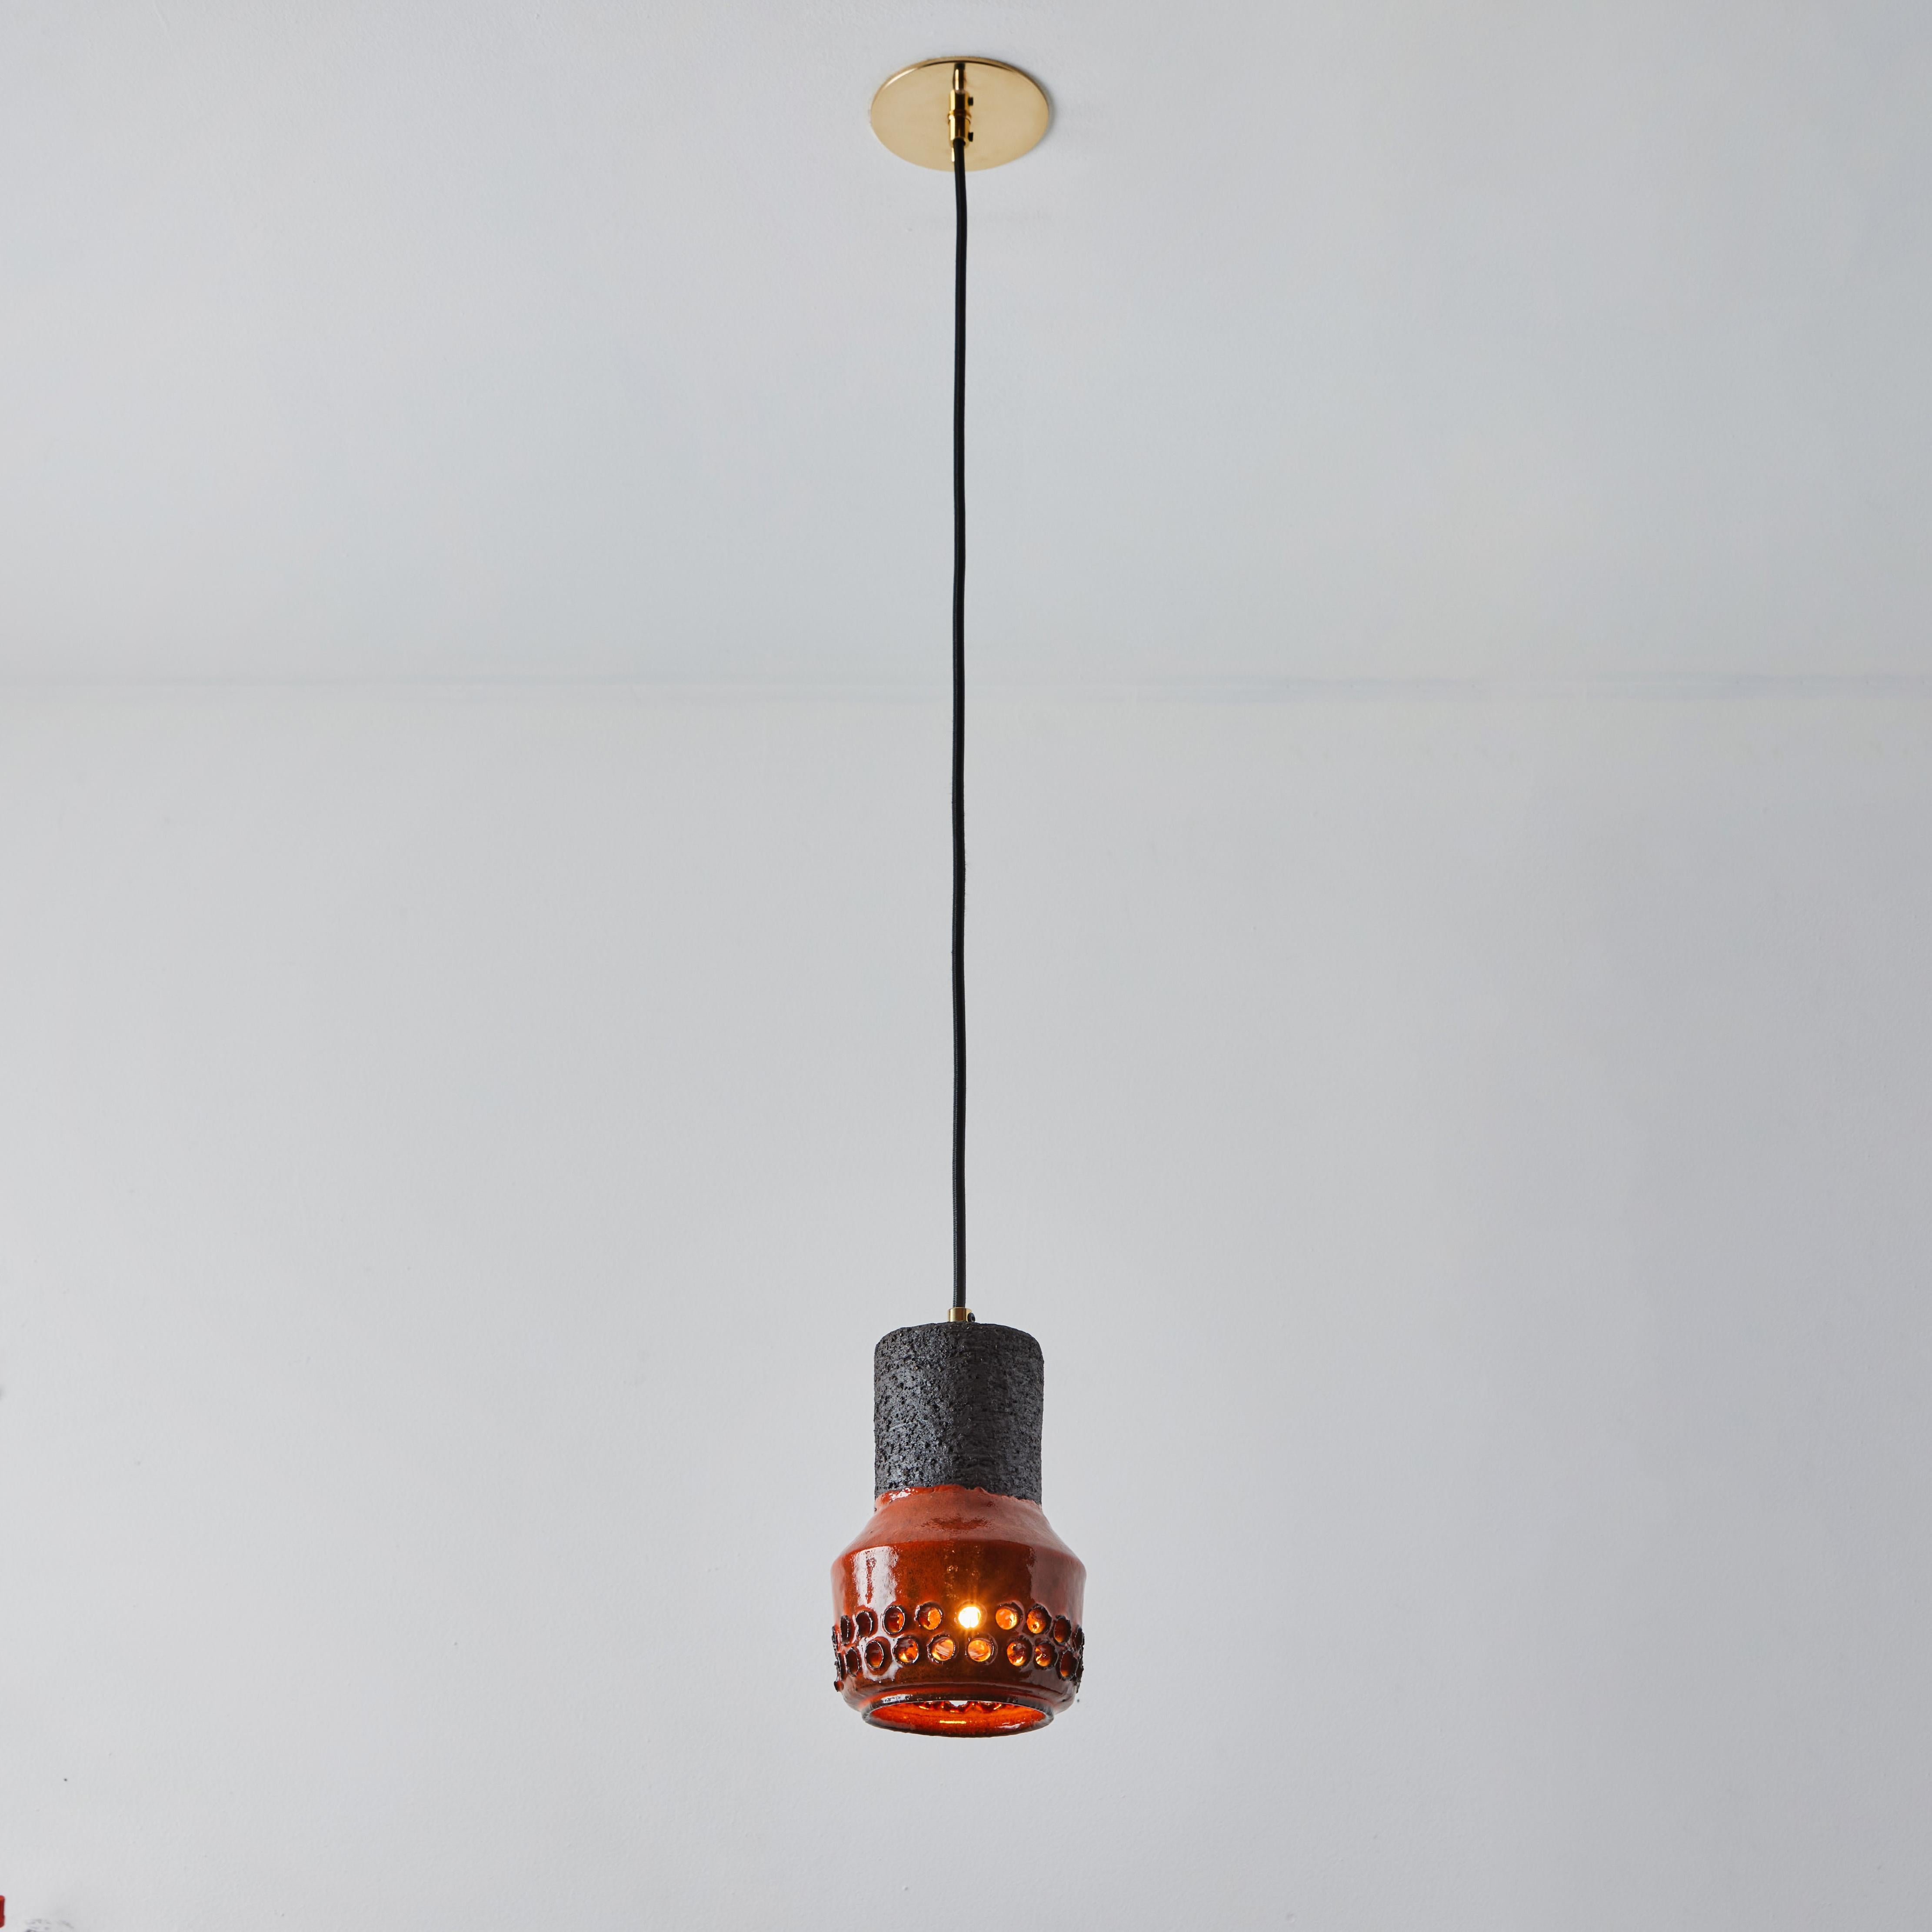 1950s Aldo Londi Ceramic Bitossi Pendant Lamp for Italian Raymor. This rare and sculptural Italian ceramic lamp is executed in a warm auburn glaze with geometric circular perforations. 

Accommodates 1x 60W equivalent standard medium base (e26) LED